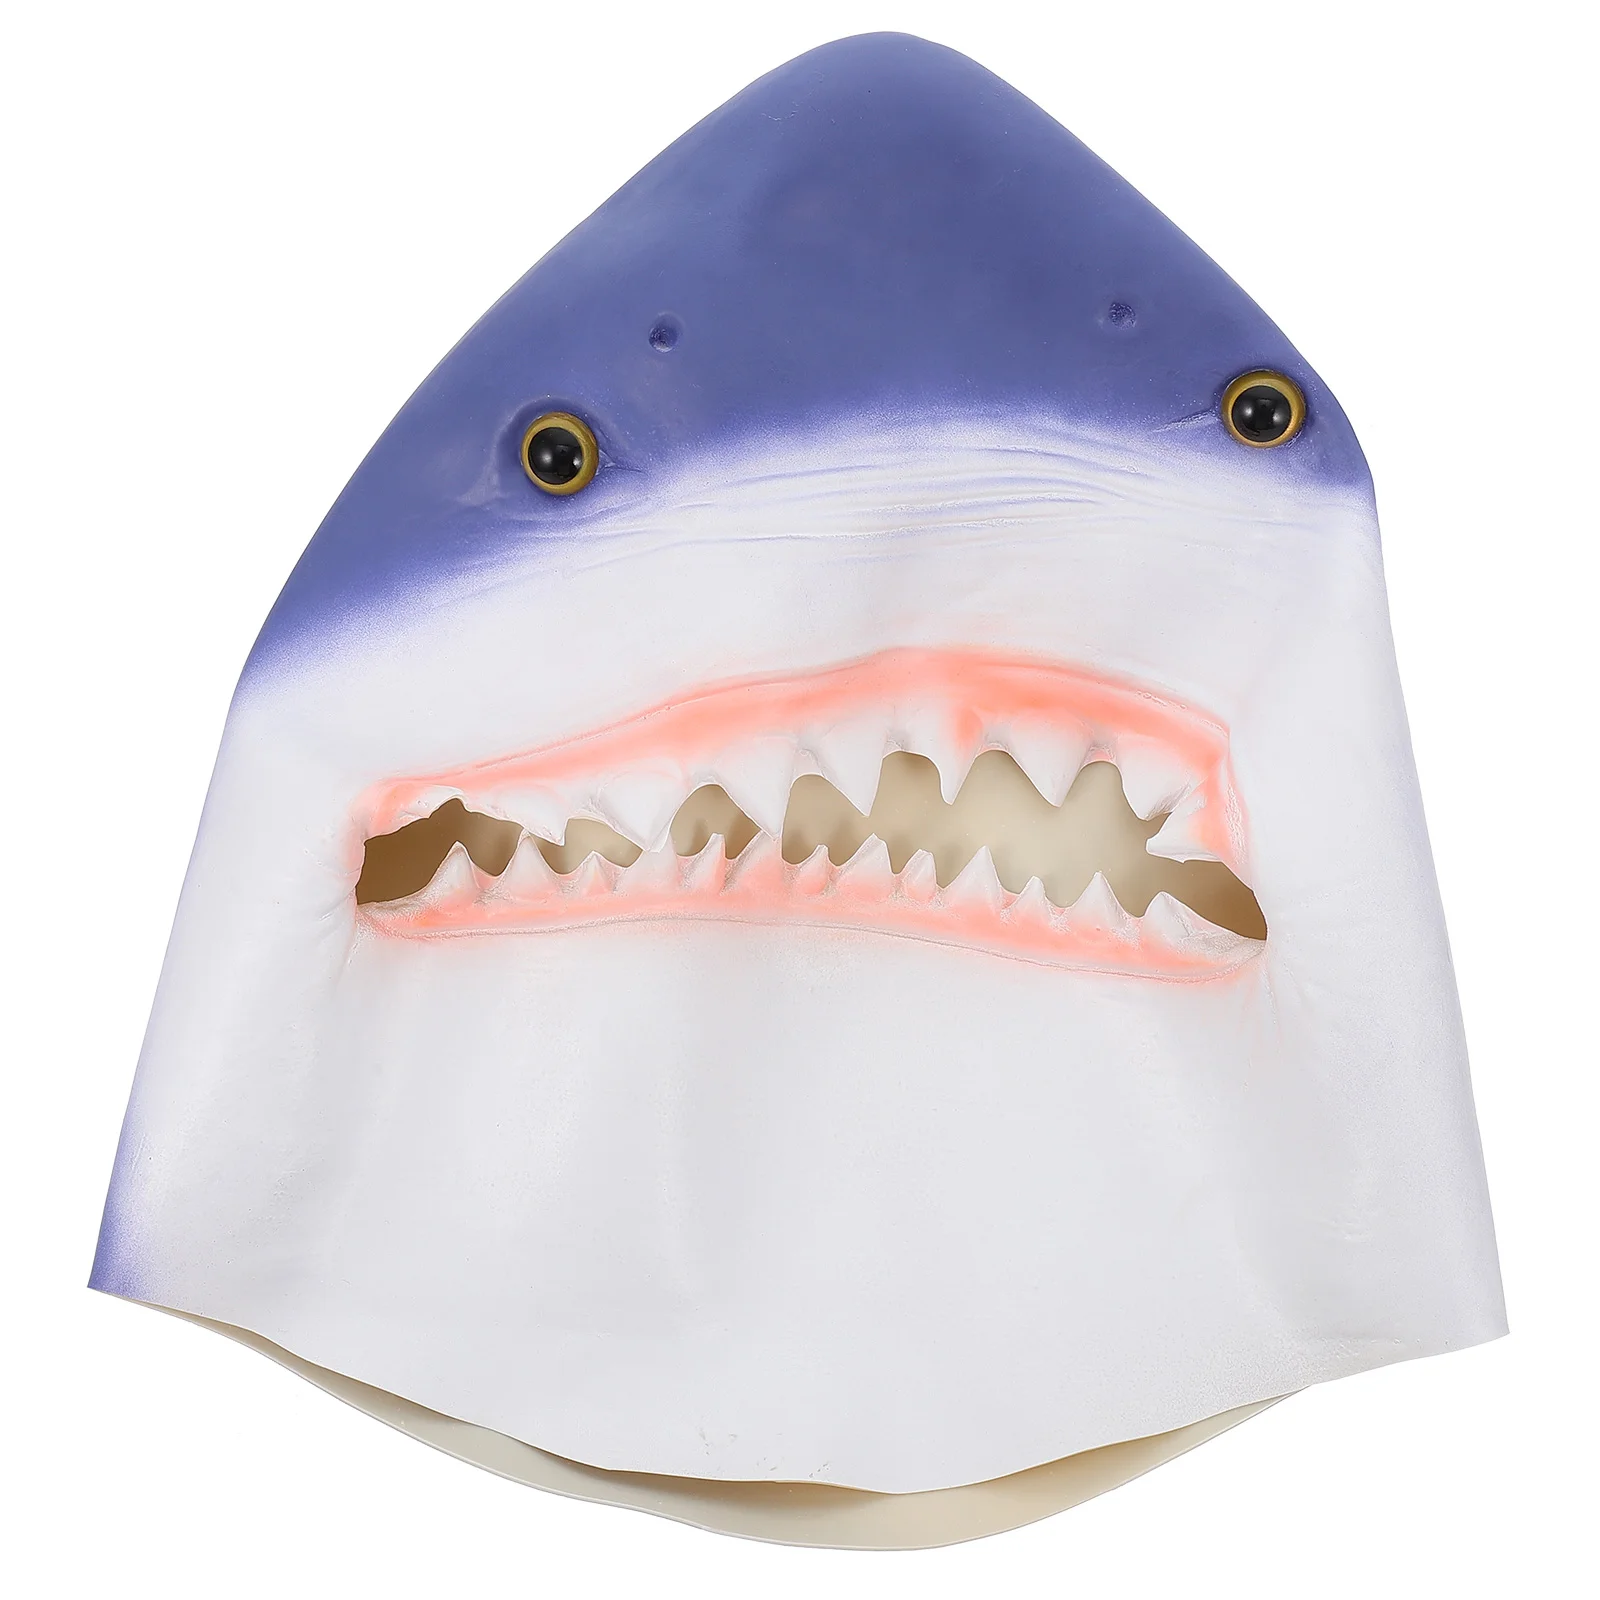 

Shark Headgear Carnival Party Favors Realistic Animal Mask Cosplay Headwear Masquerade Masks Latex Costume Make Design